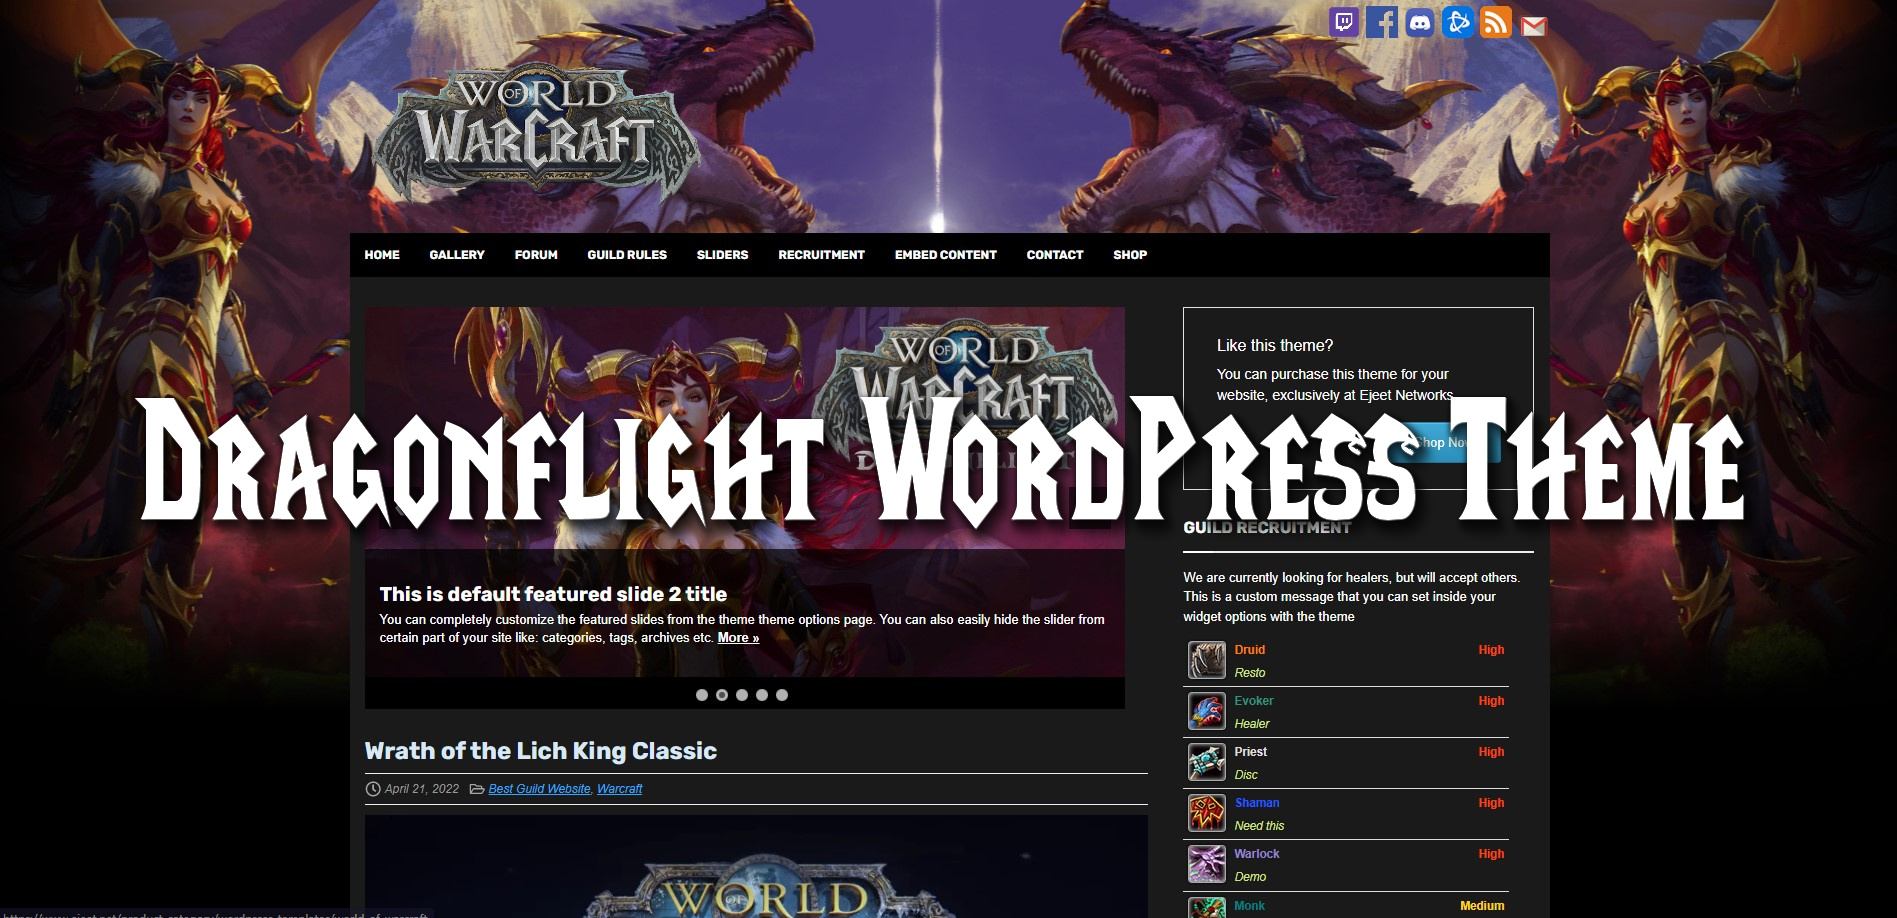 The best Dragon Flight theme for WordPress